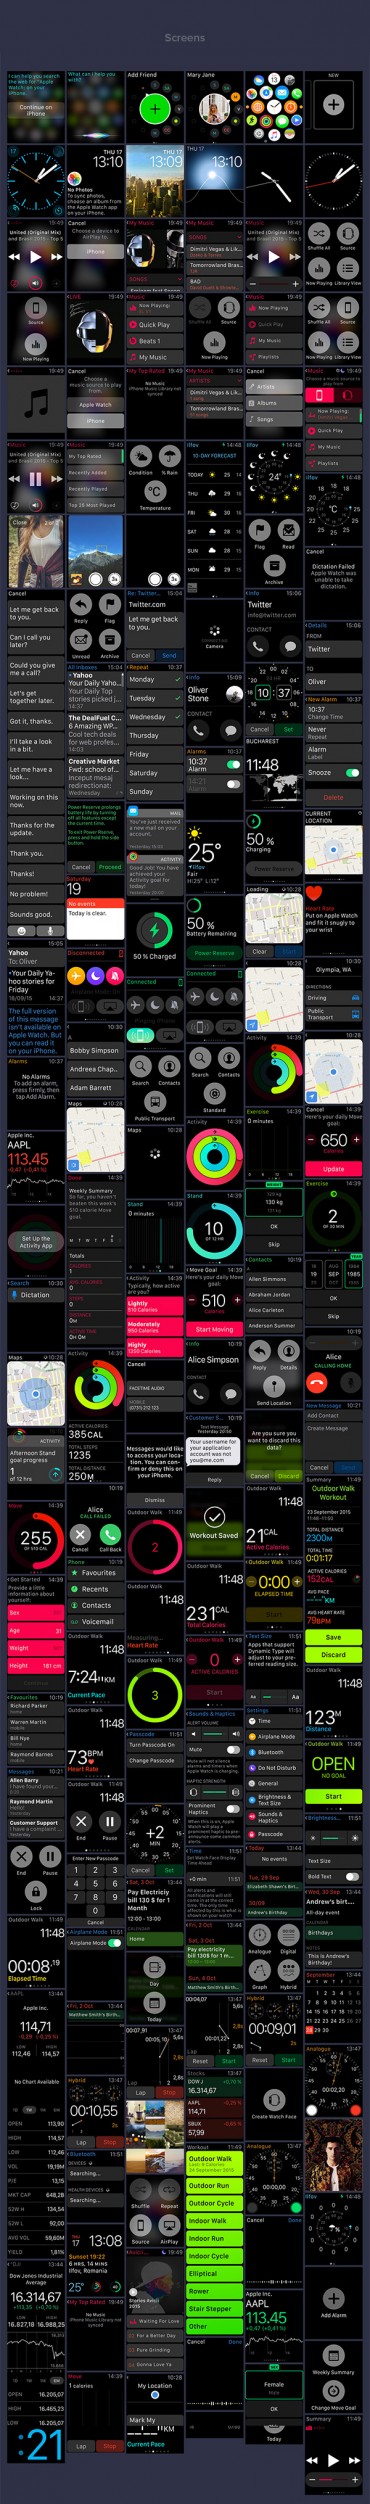 Apple WatchOS 2 Human Interface Complete UI Kit - Graphic Google ...